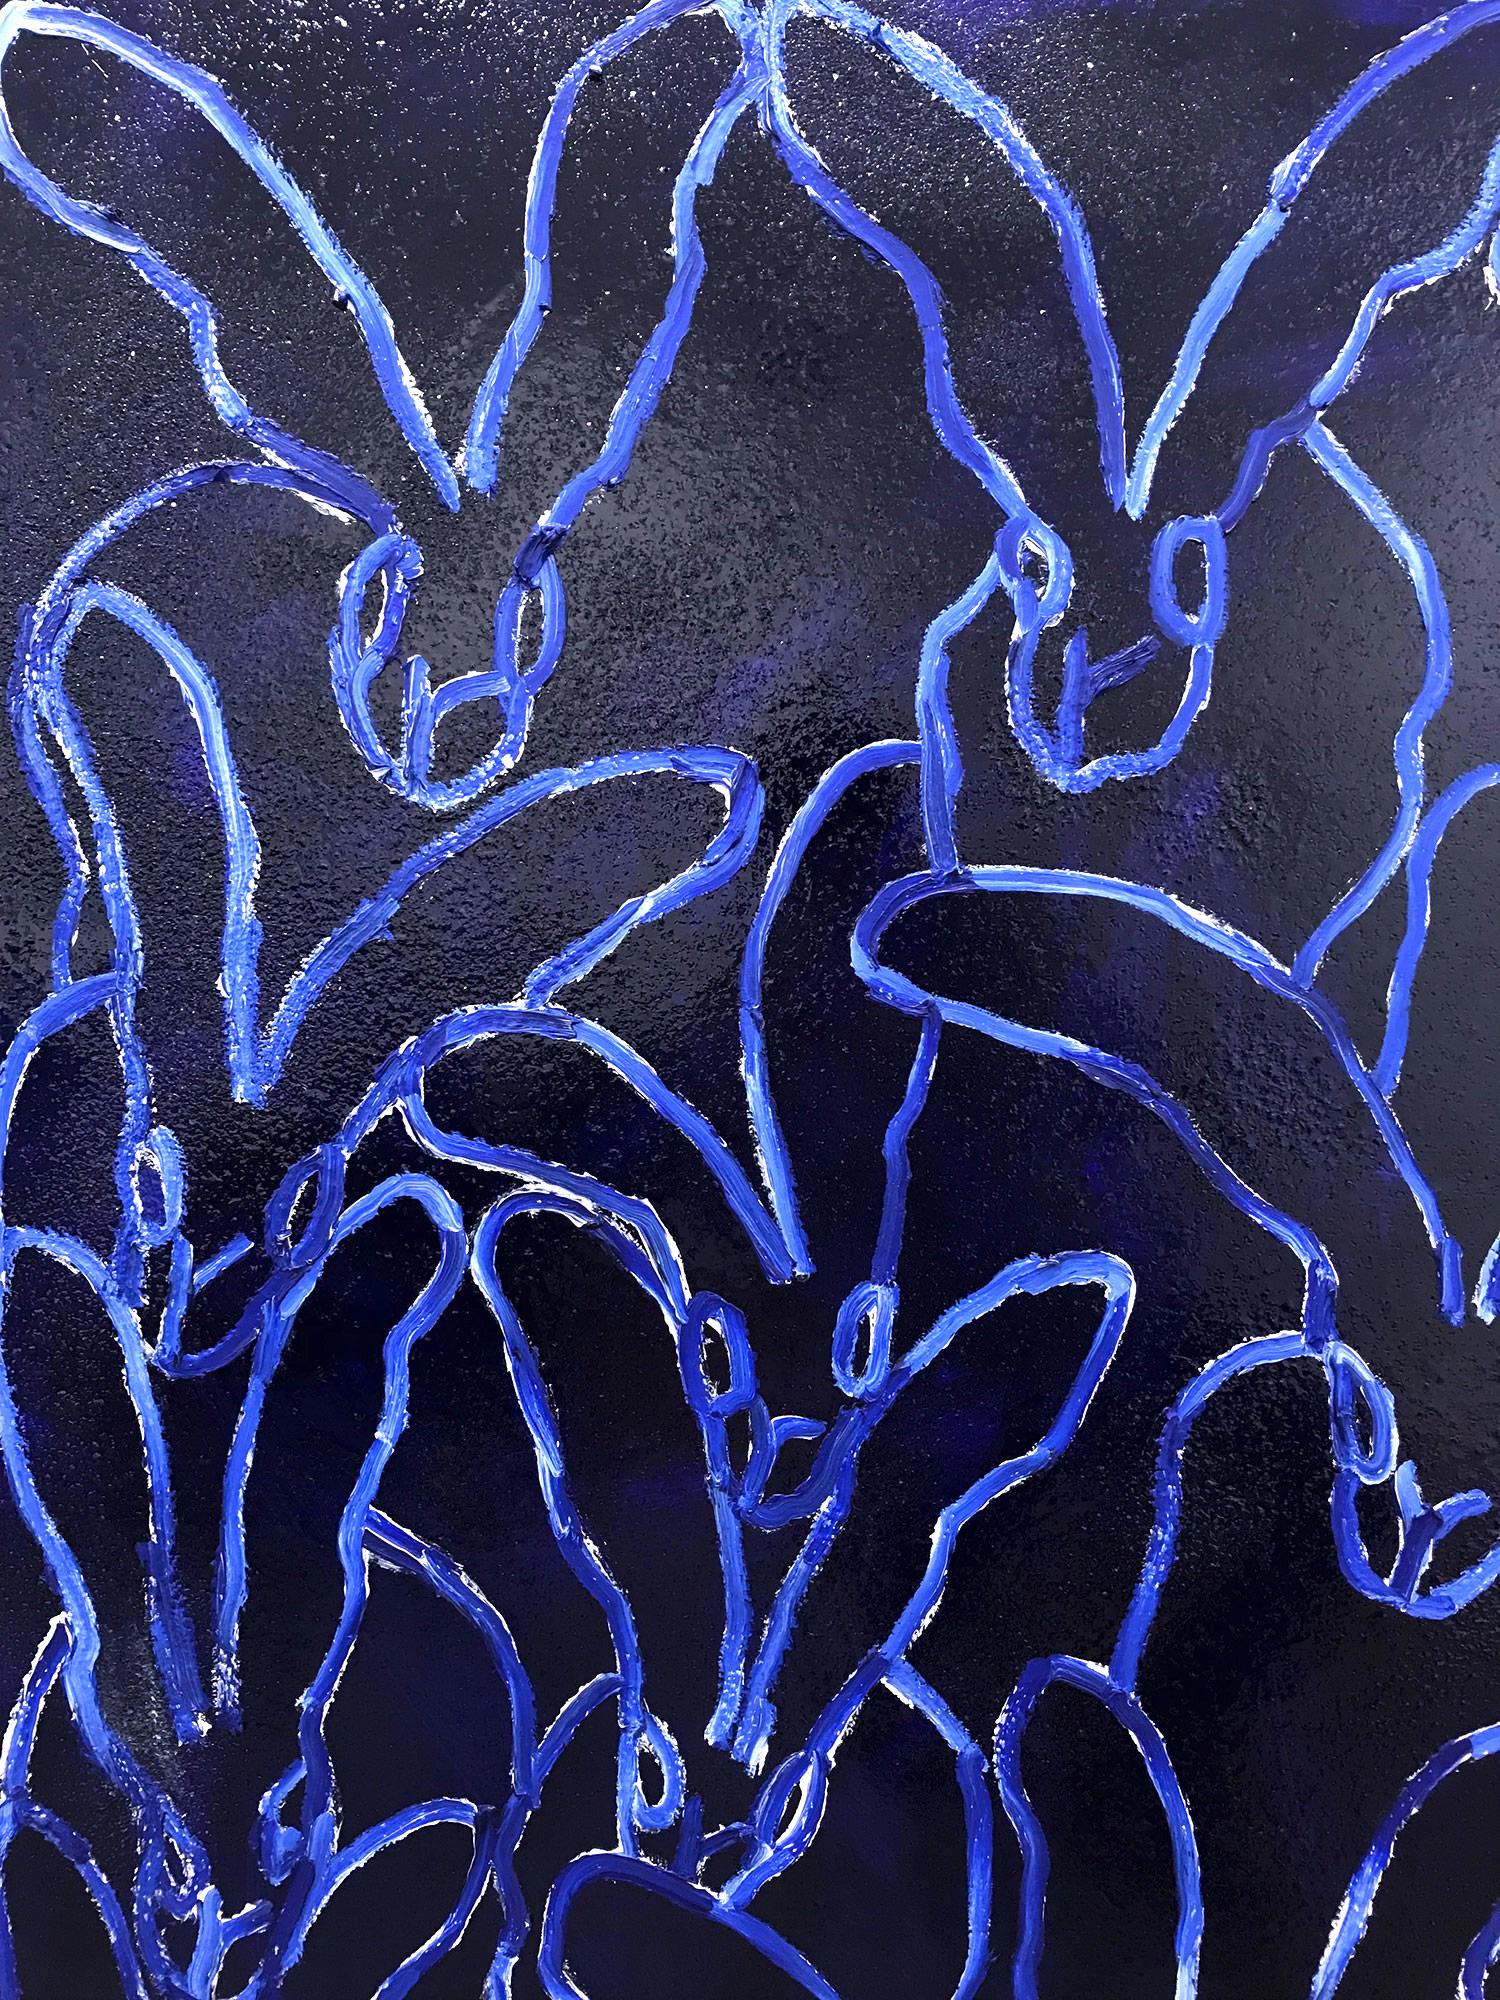 Blue Tanzania (Diamond Dust Bunnies on Ultramarine Blue) - Contemporary Painting by Hunt Slonem